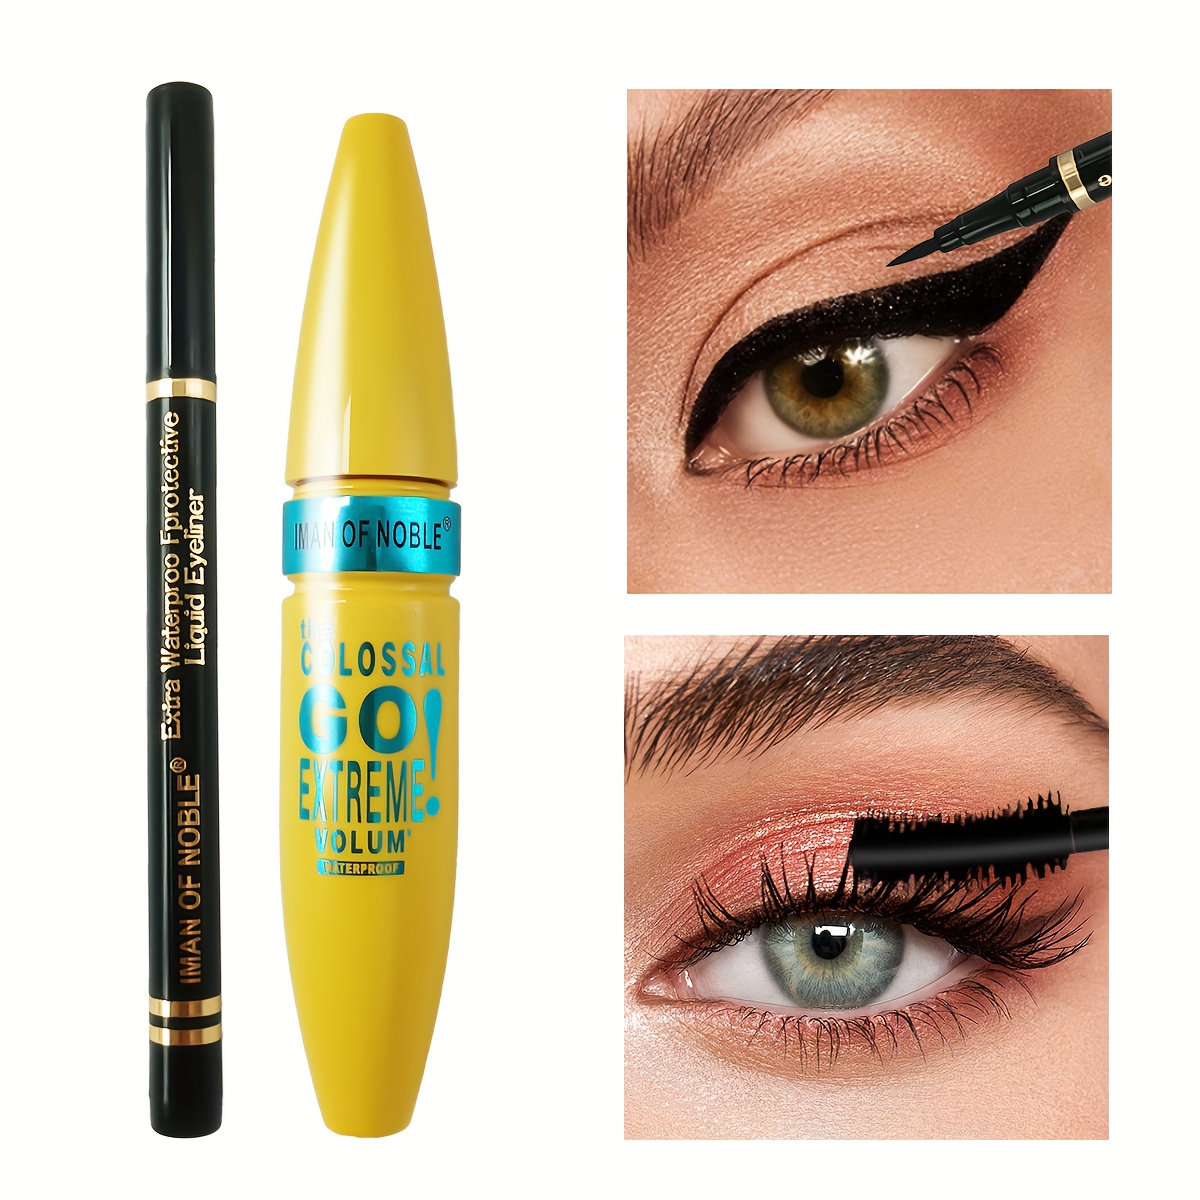 

Mascara And Eyeliner, Super Black, Volumizing And Curling Eyelash Makeup Combo Pack